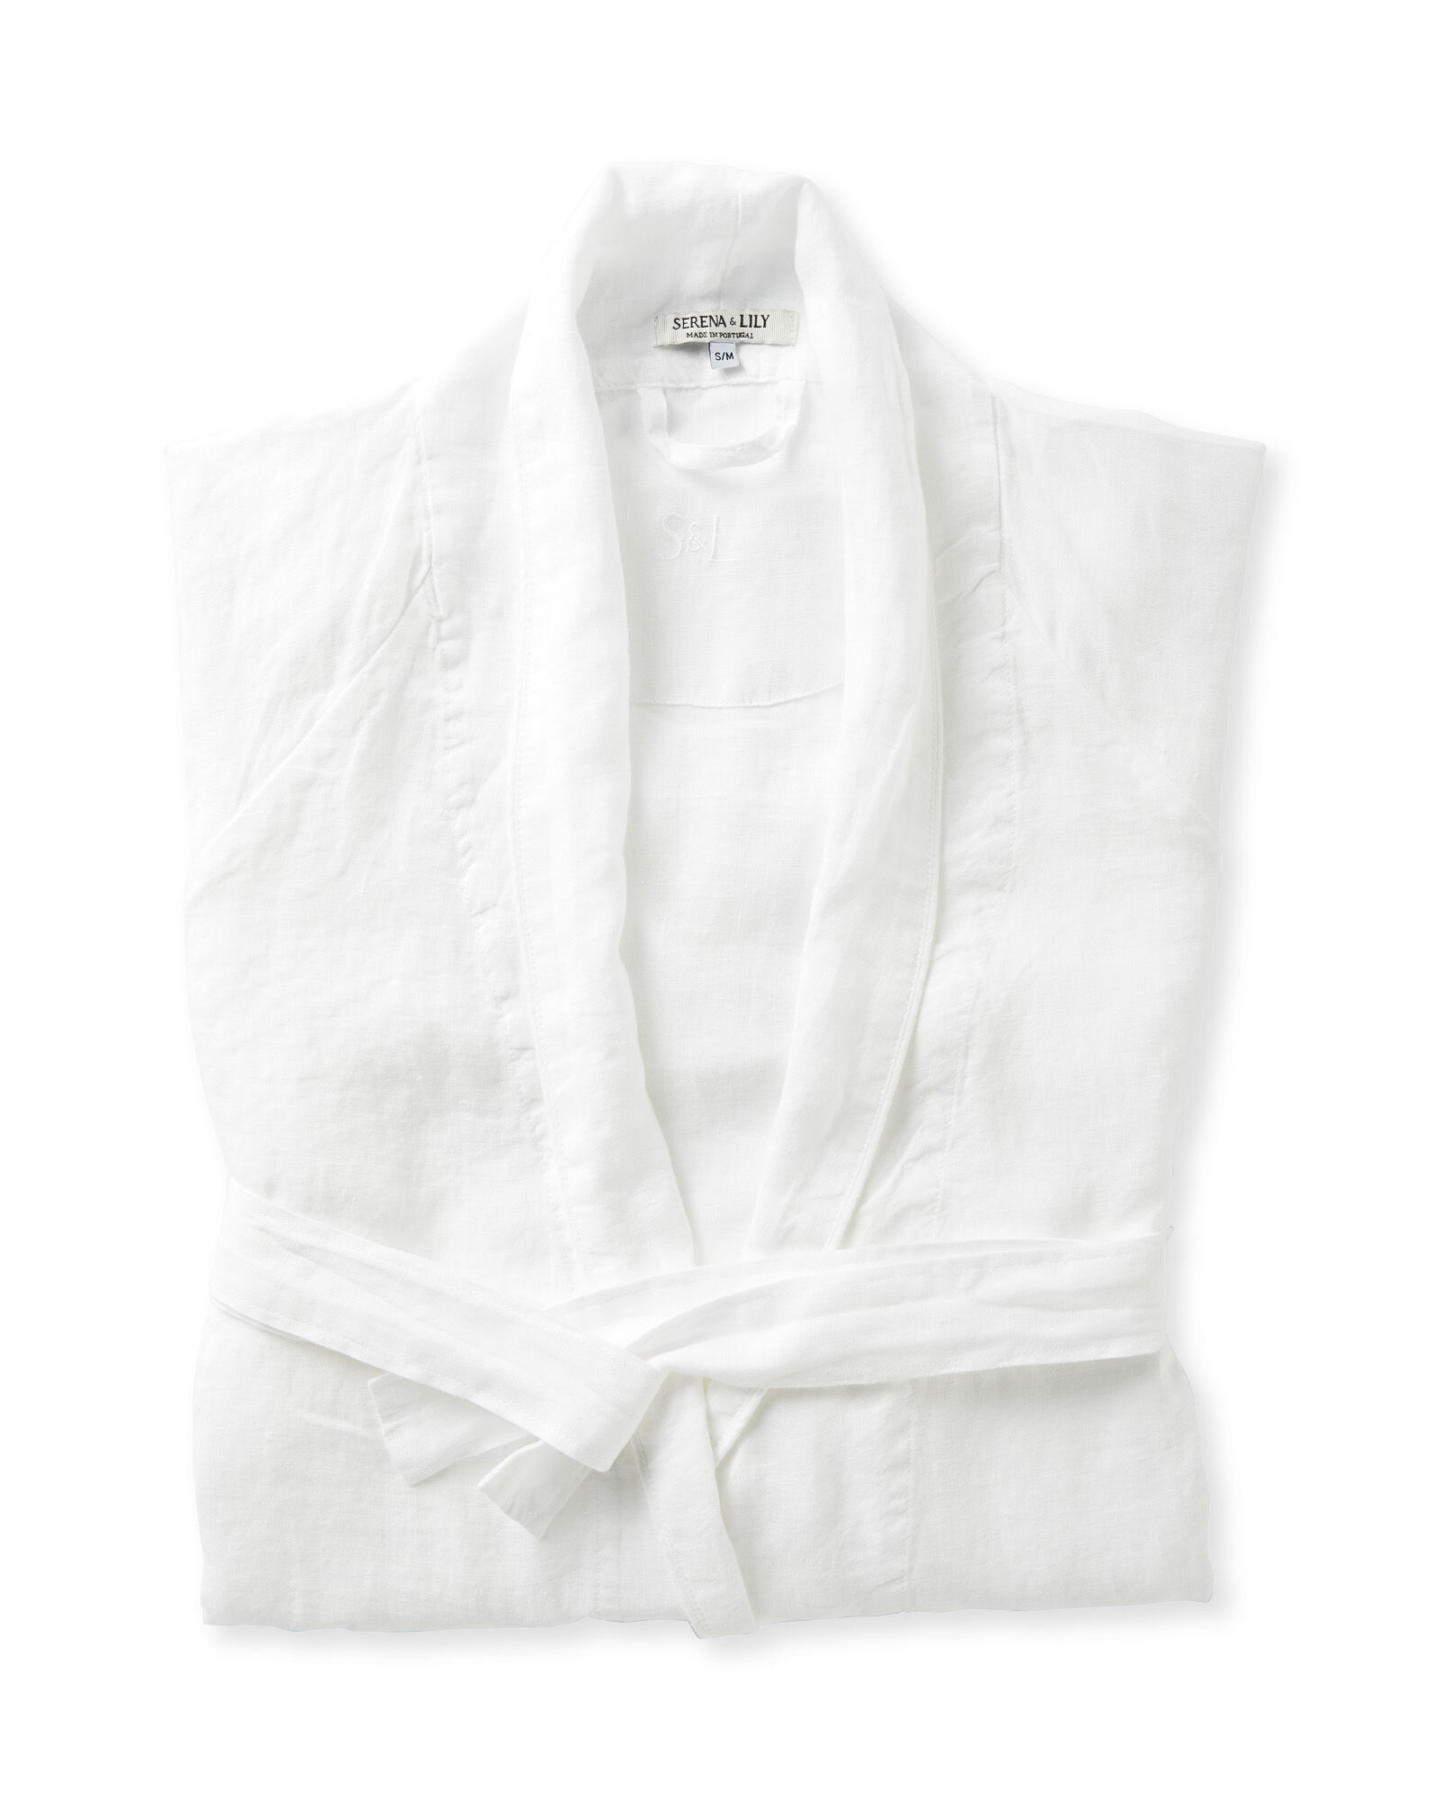 Positano white linen robe, Serena & Lily